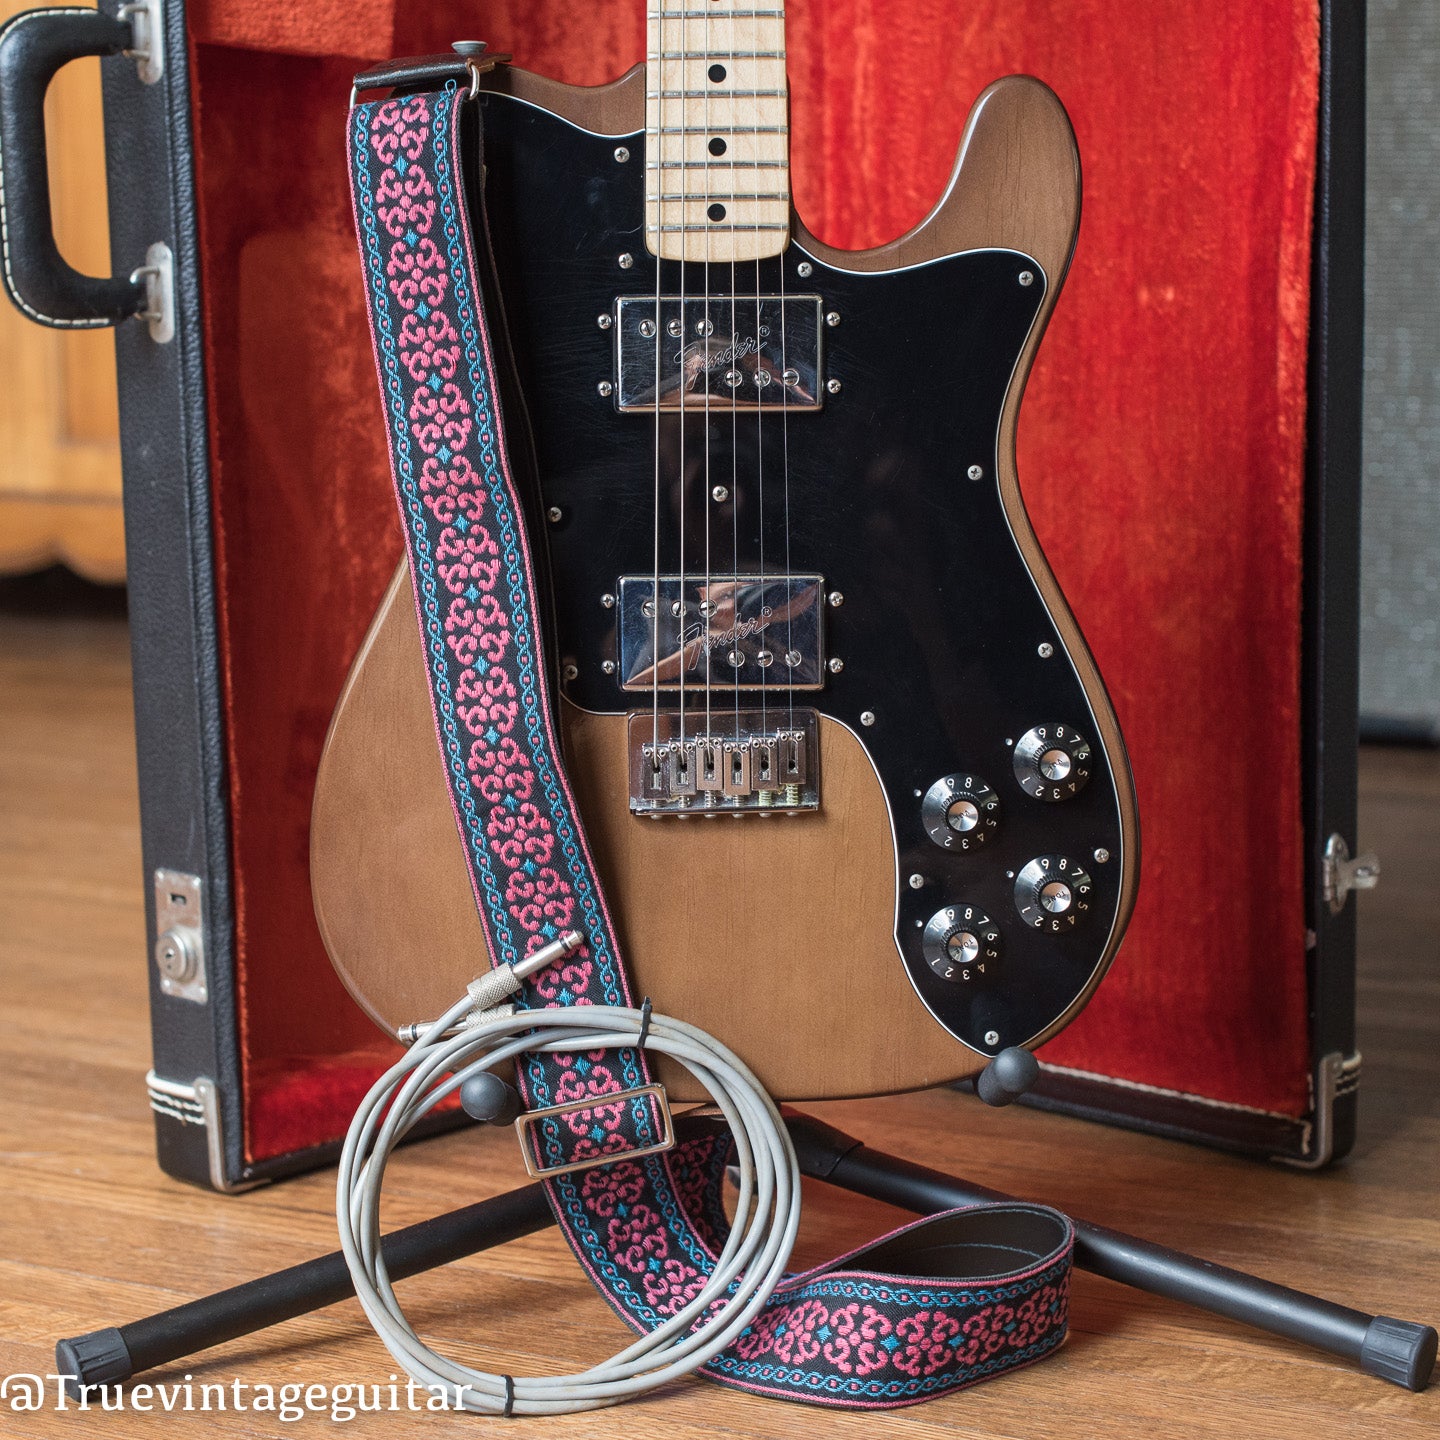 Vintage 1974 Fender Telecaster Deluxe guitar mocha